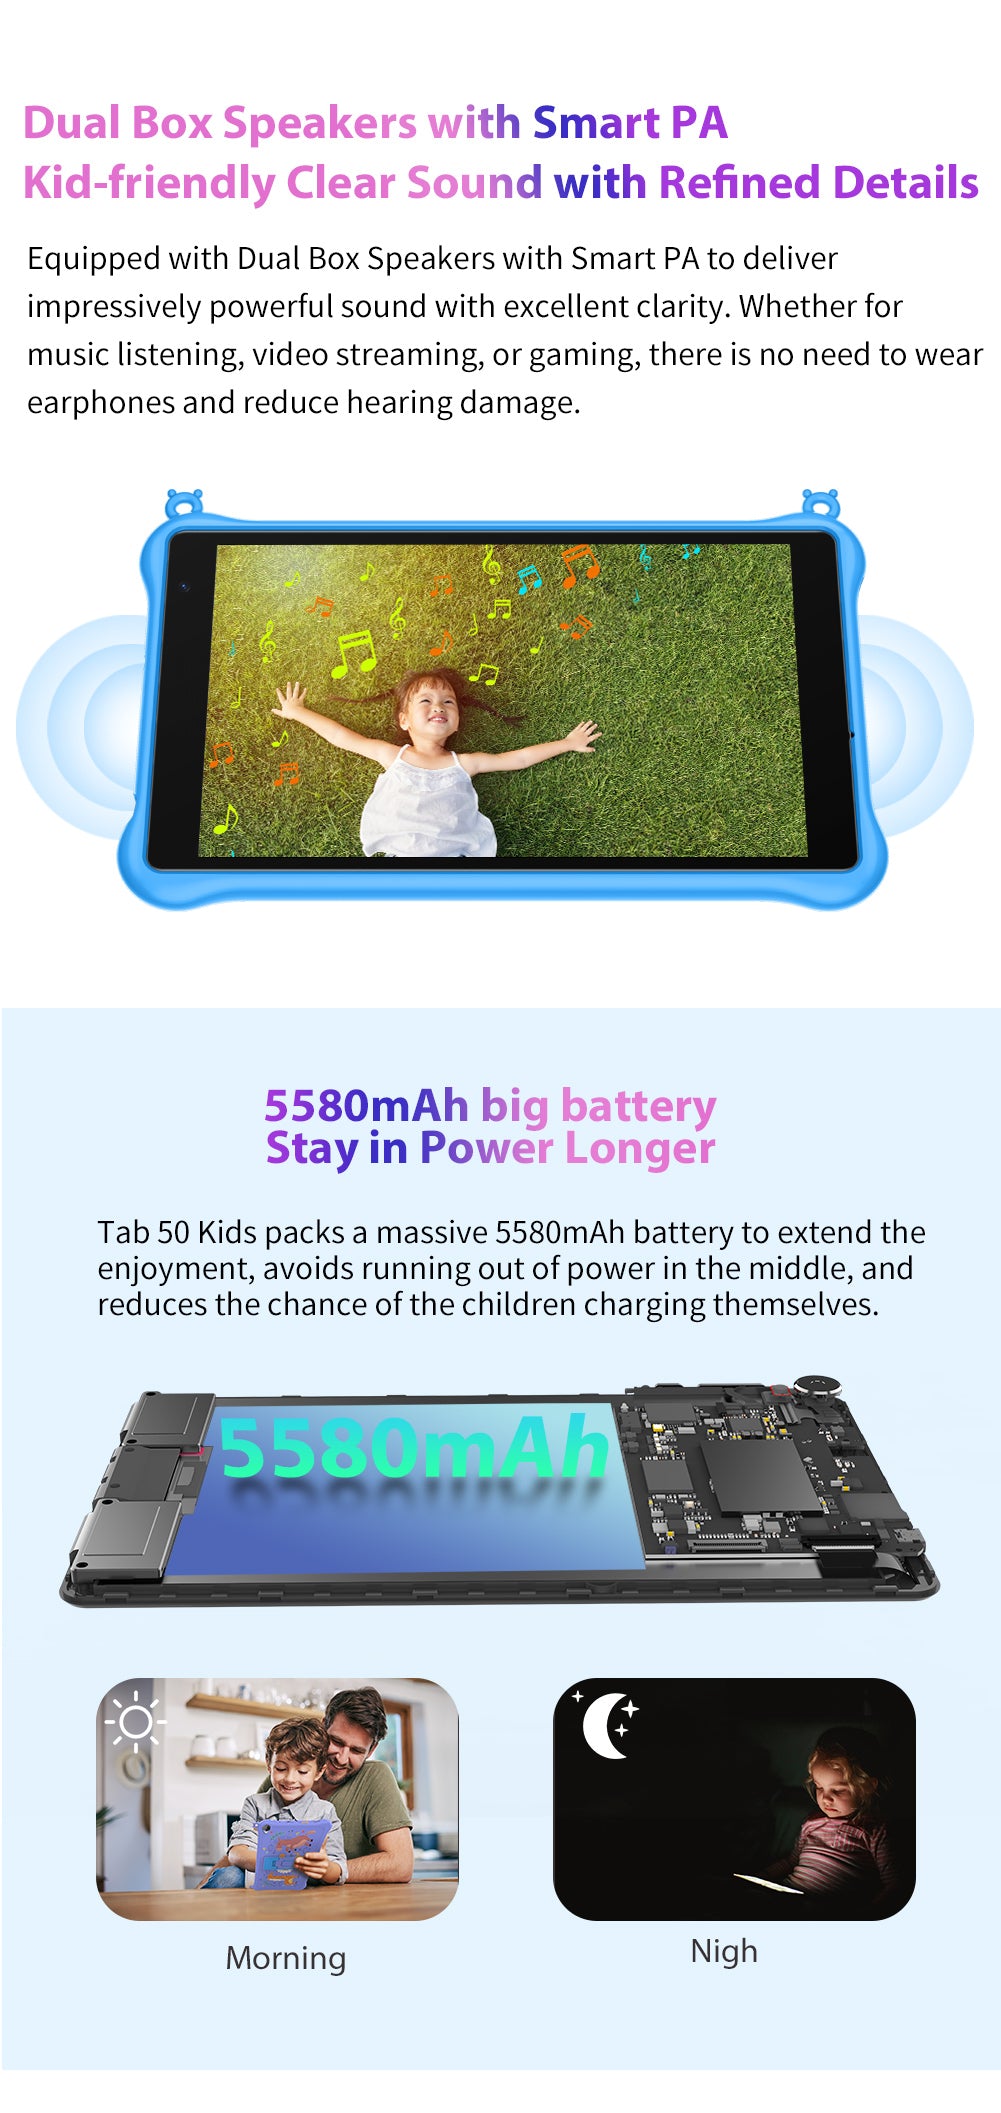 Blackview 50 Kids Tablet PC